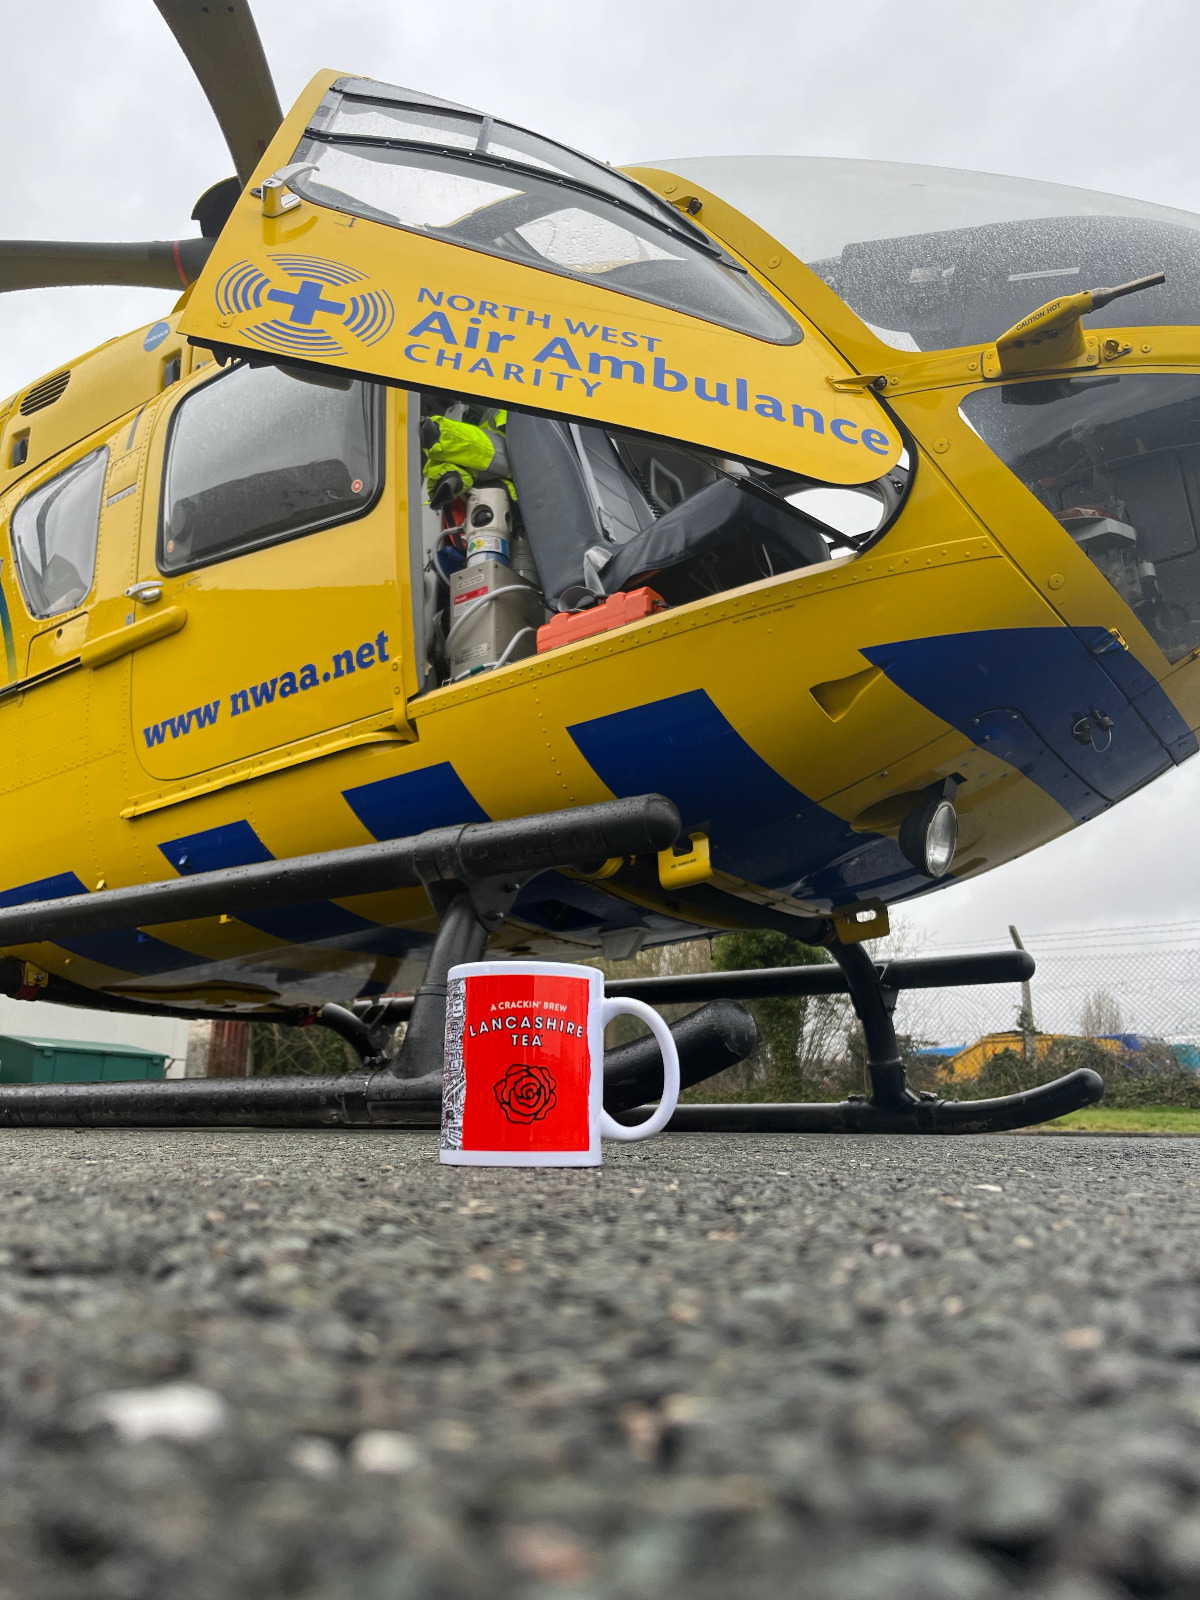 Lancashire Tea announces partnership with North West Air Ambulance Charity